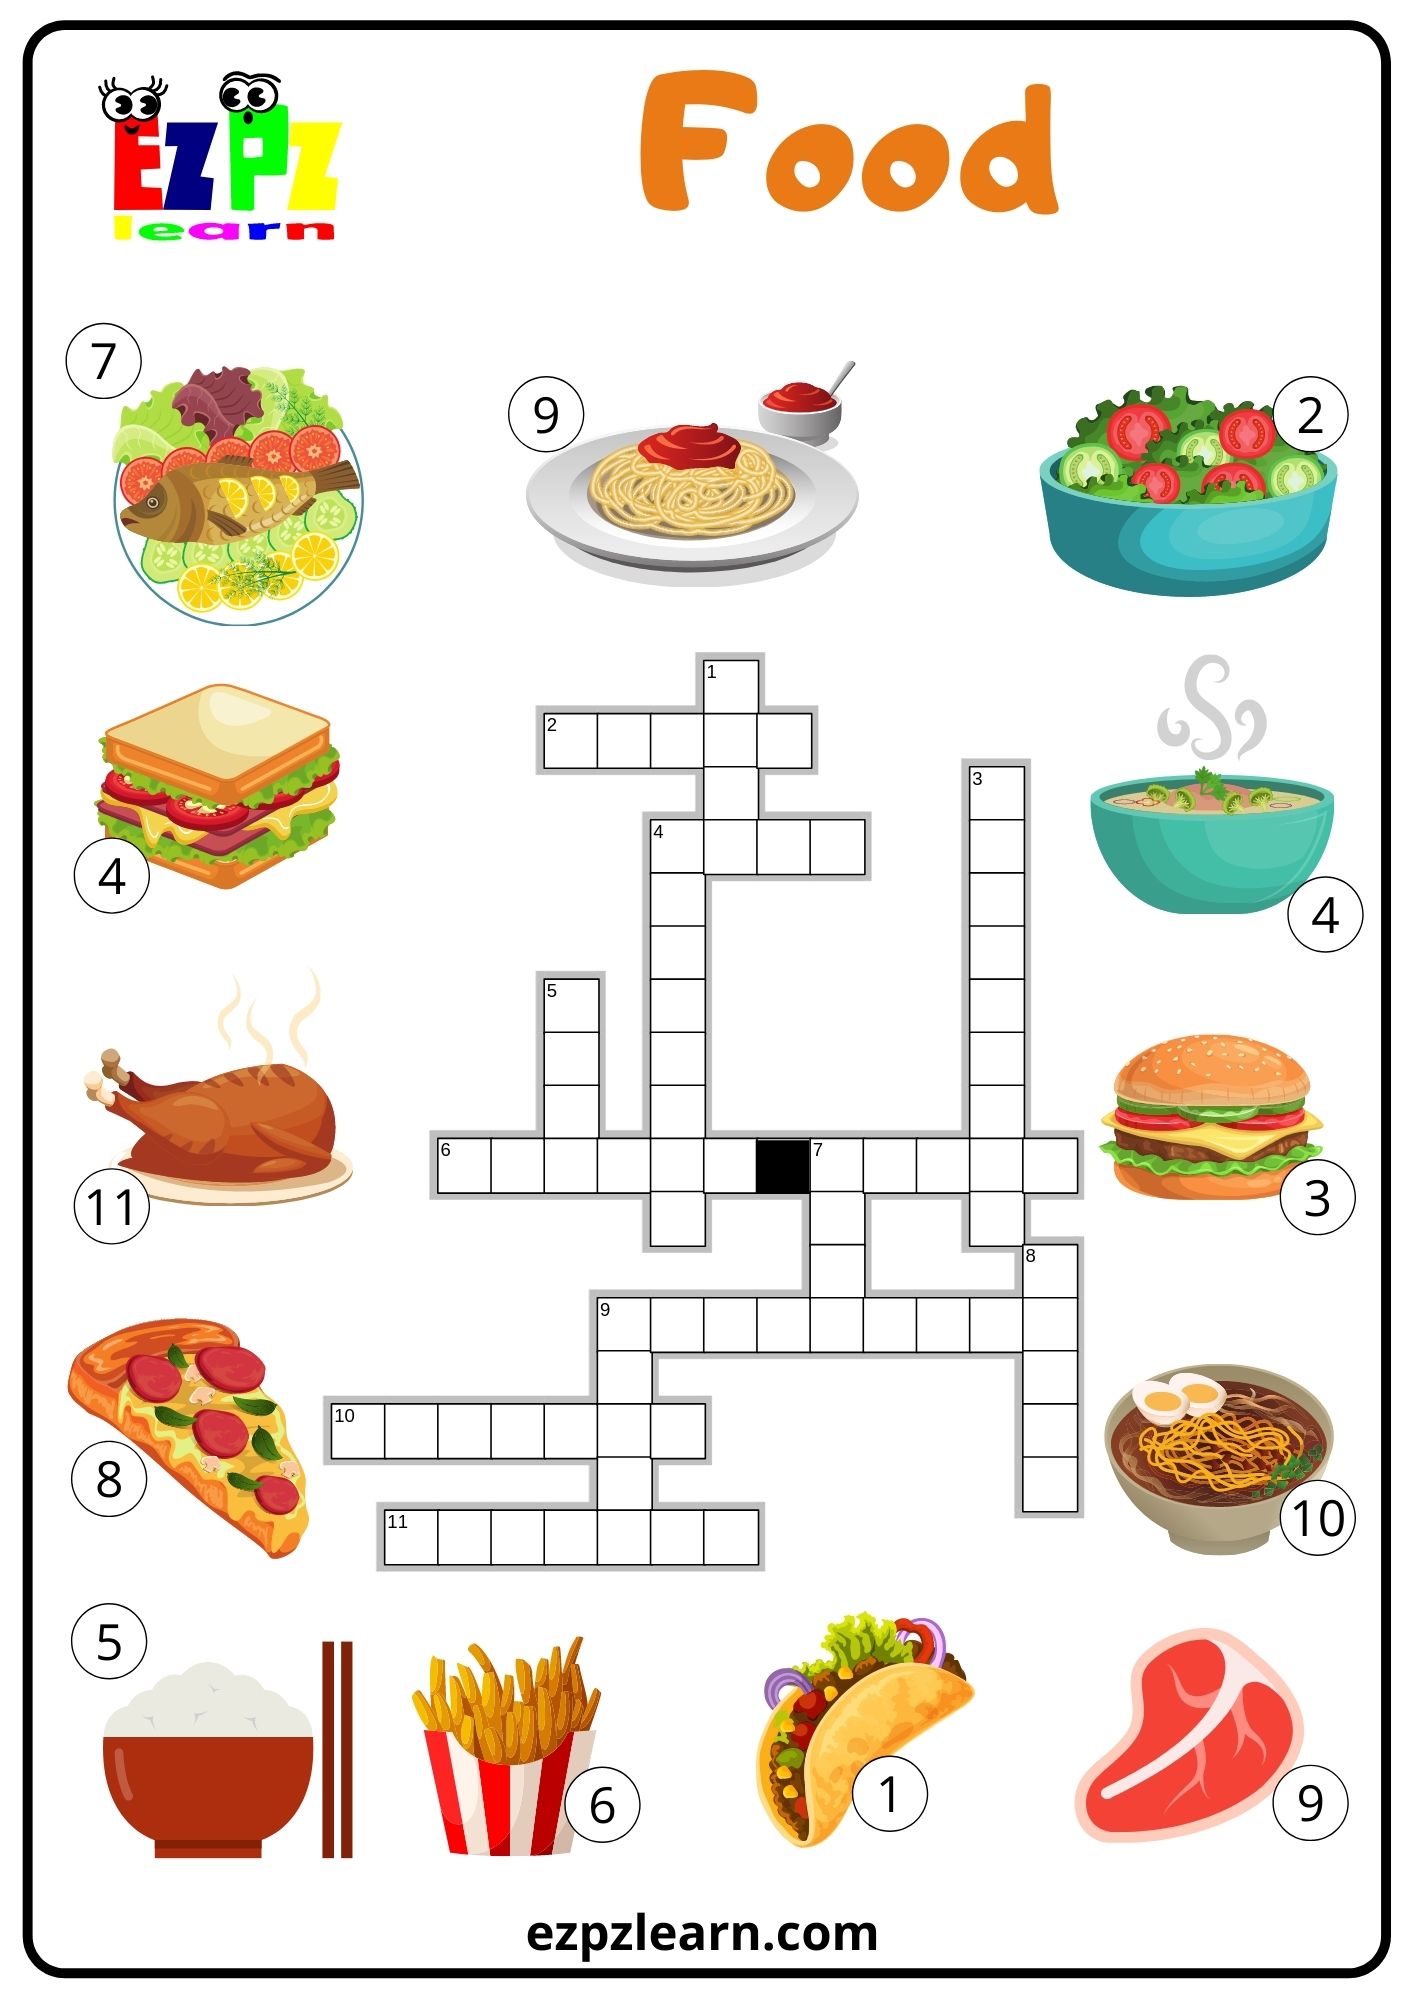 Food Crossword Ezpzlearn com